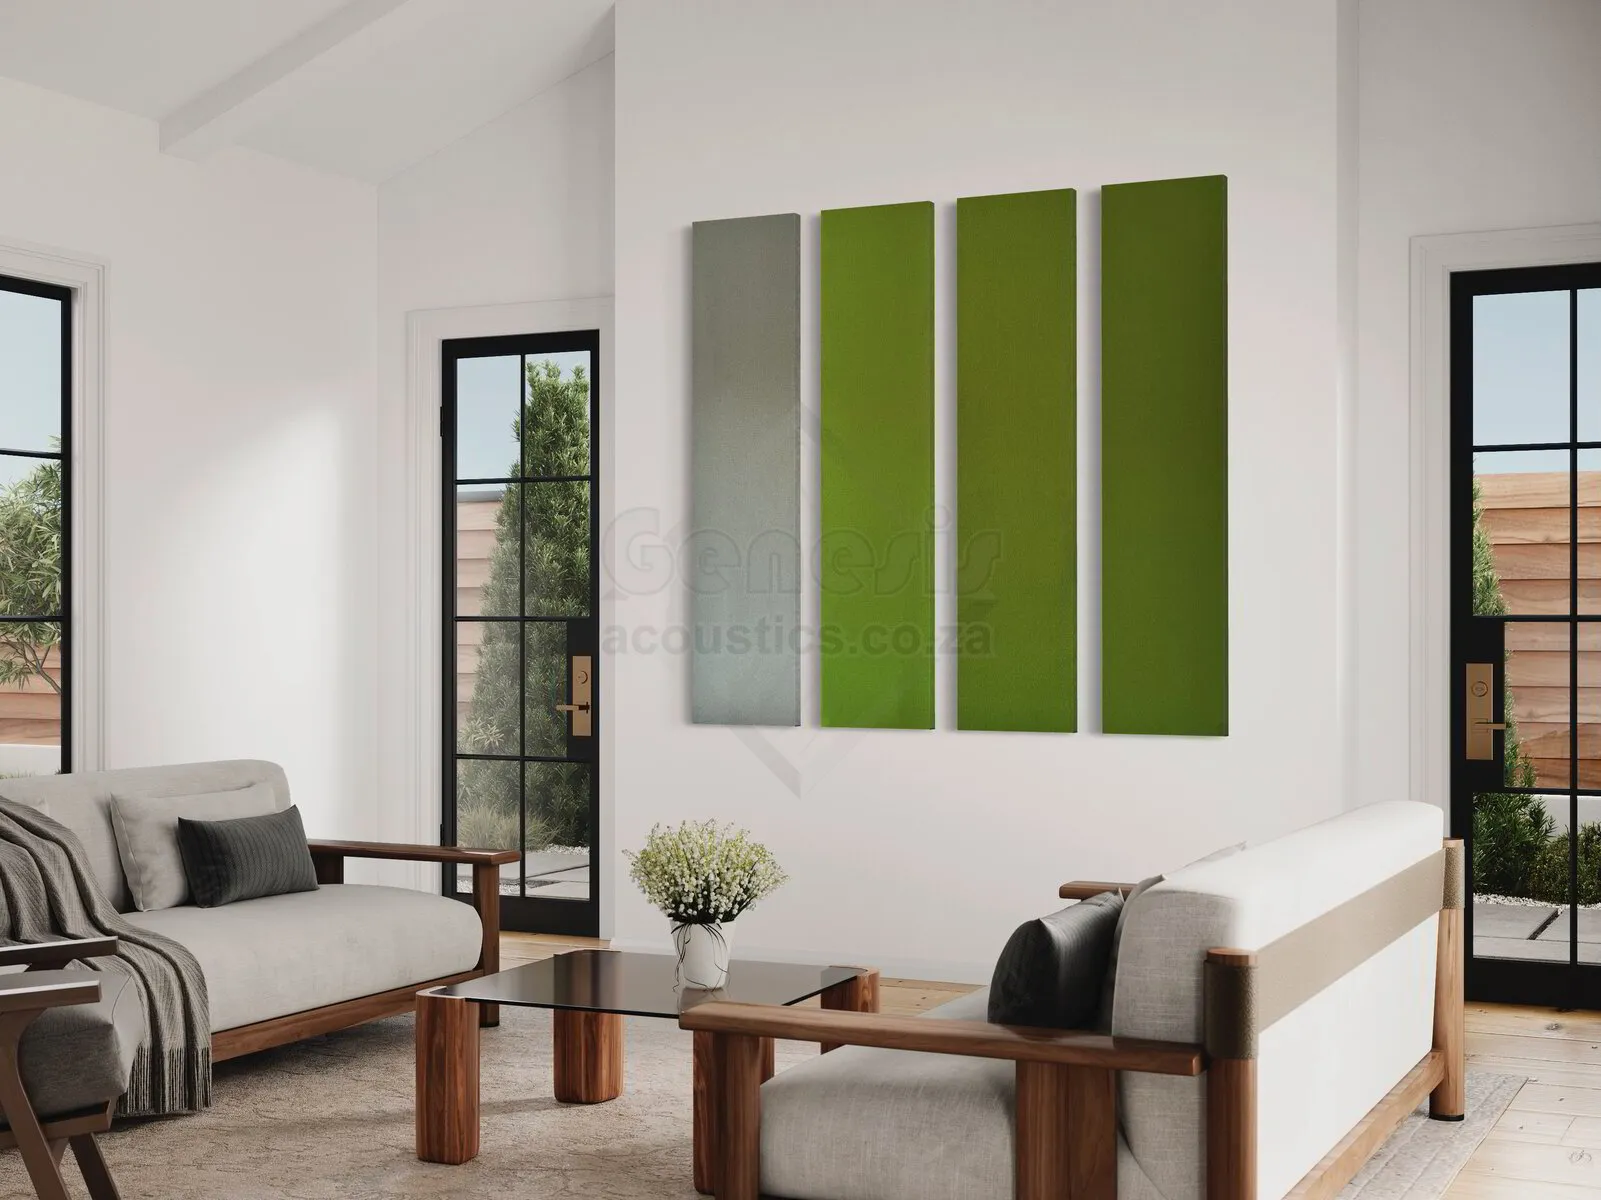 S5 Pro Acoustic Wall Panels - 180cm x 40cm Set of 4 - Spring Time Colour Combo